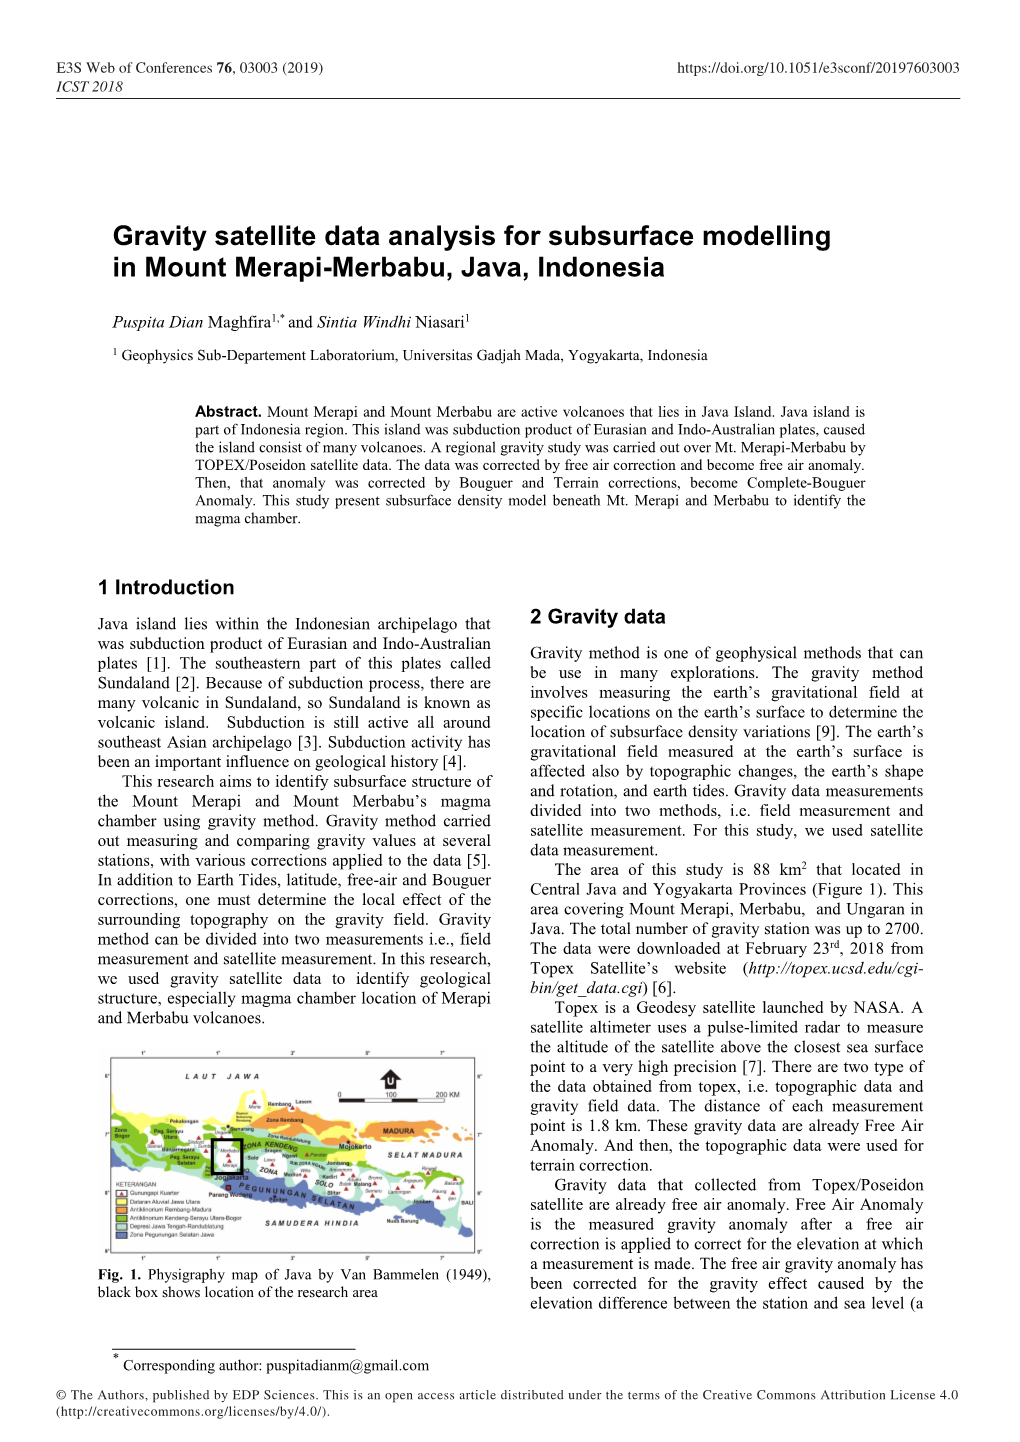 Gravity Satellite Data Analysis for Subsurface Modelling in Mount Merapi-Merbabu, Java, Indonesia